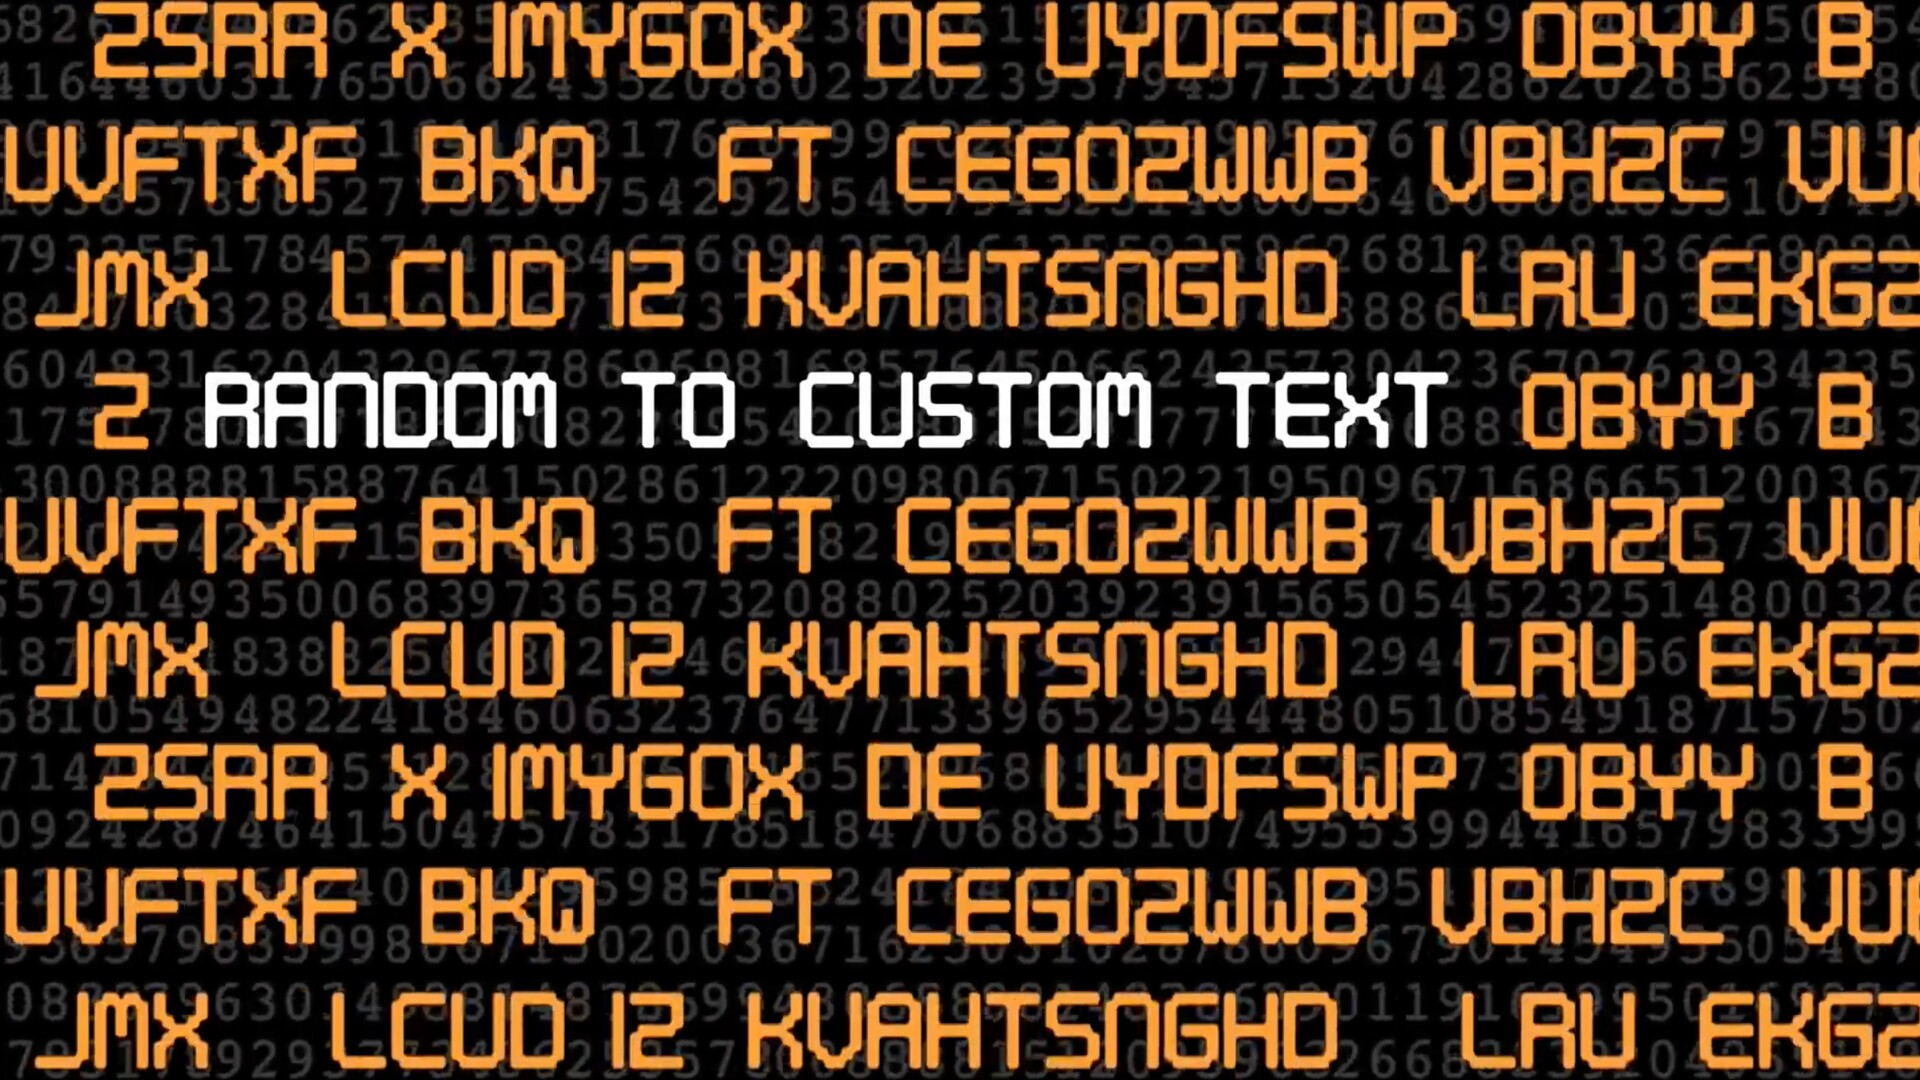 fcpx插件Random to Custom Text(添加随机自定义文本插件)